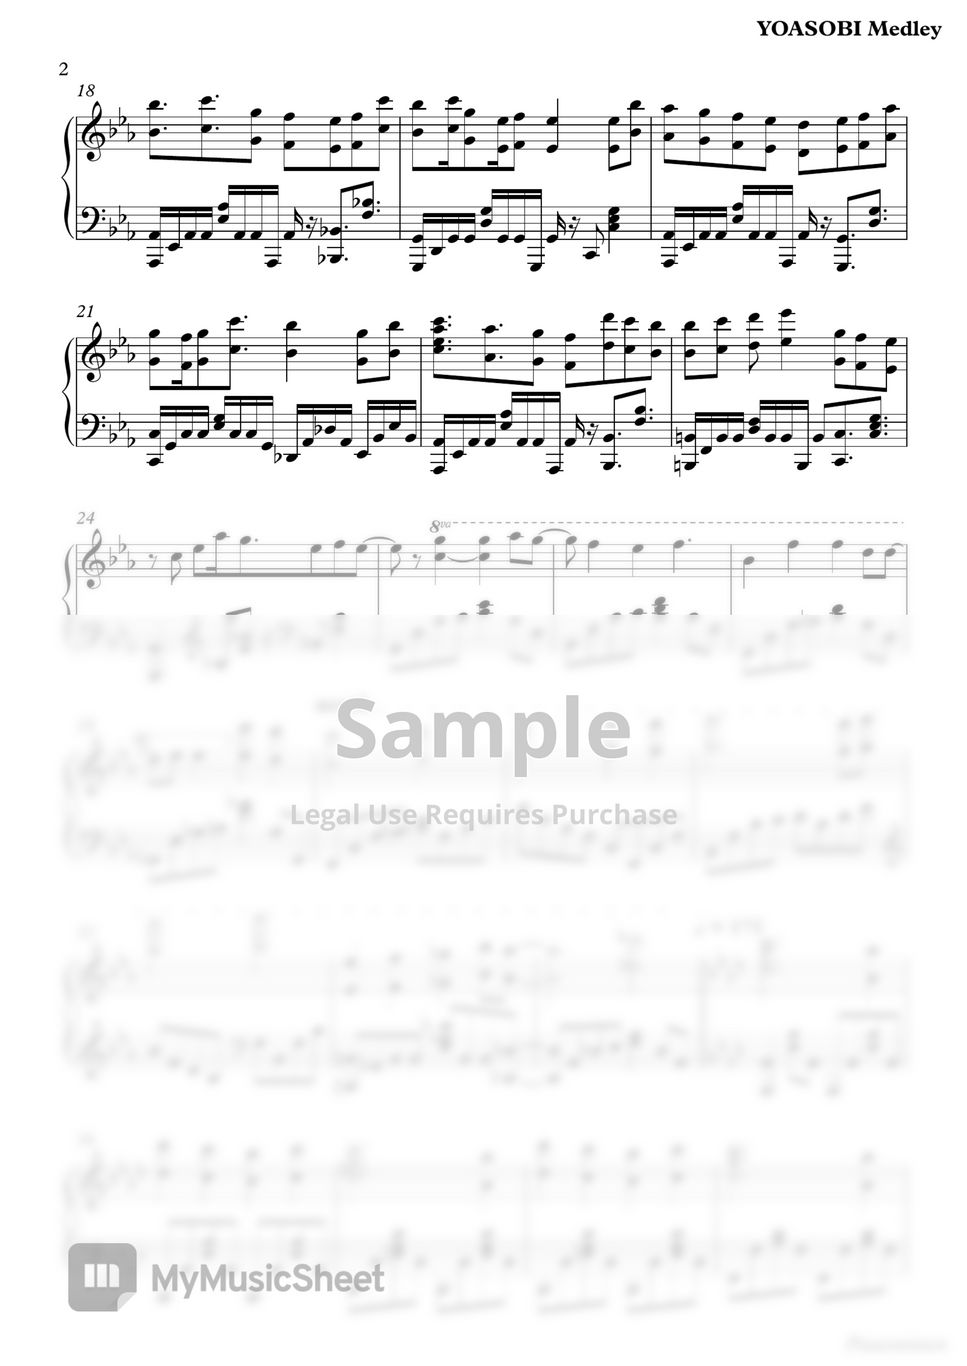 YOASOBI - YOASOBI 经典歌曲【钢琴组曲】 by Pianominion